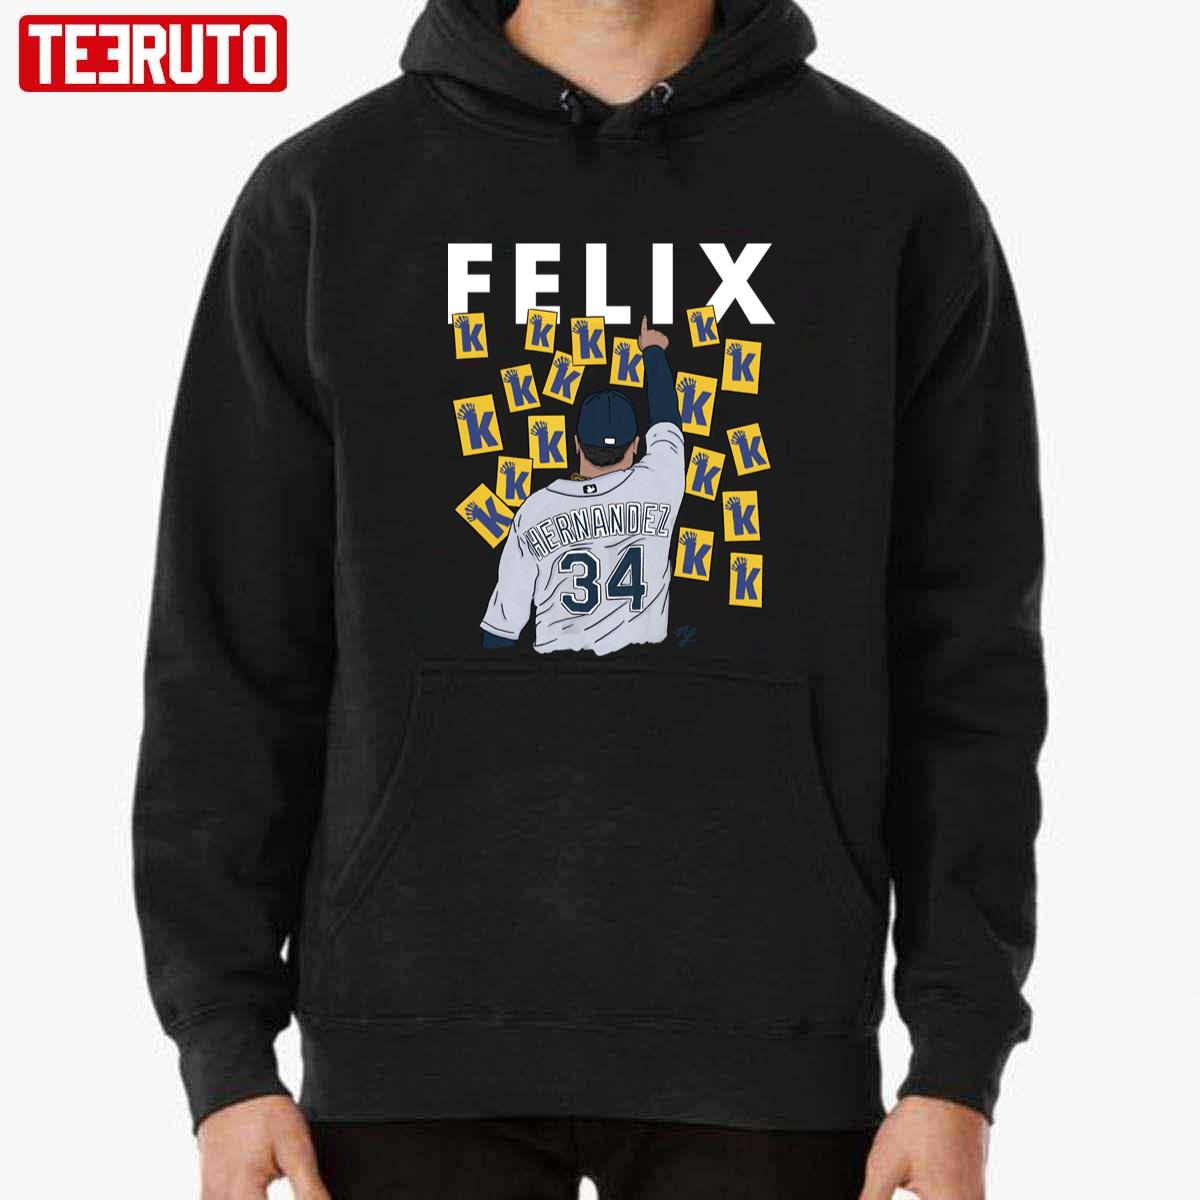 Felix Hernandez Number 34 Art Unisex T-shirt - Teeruto